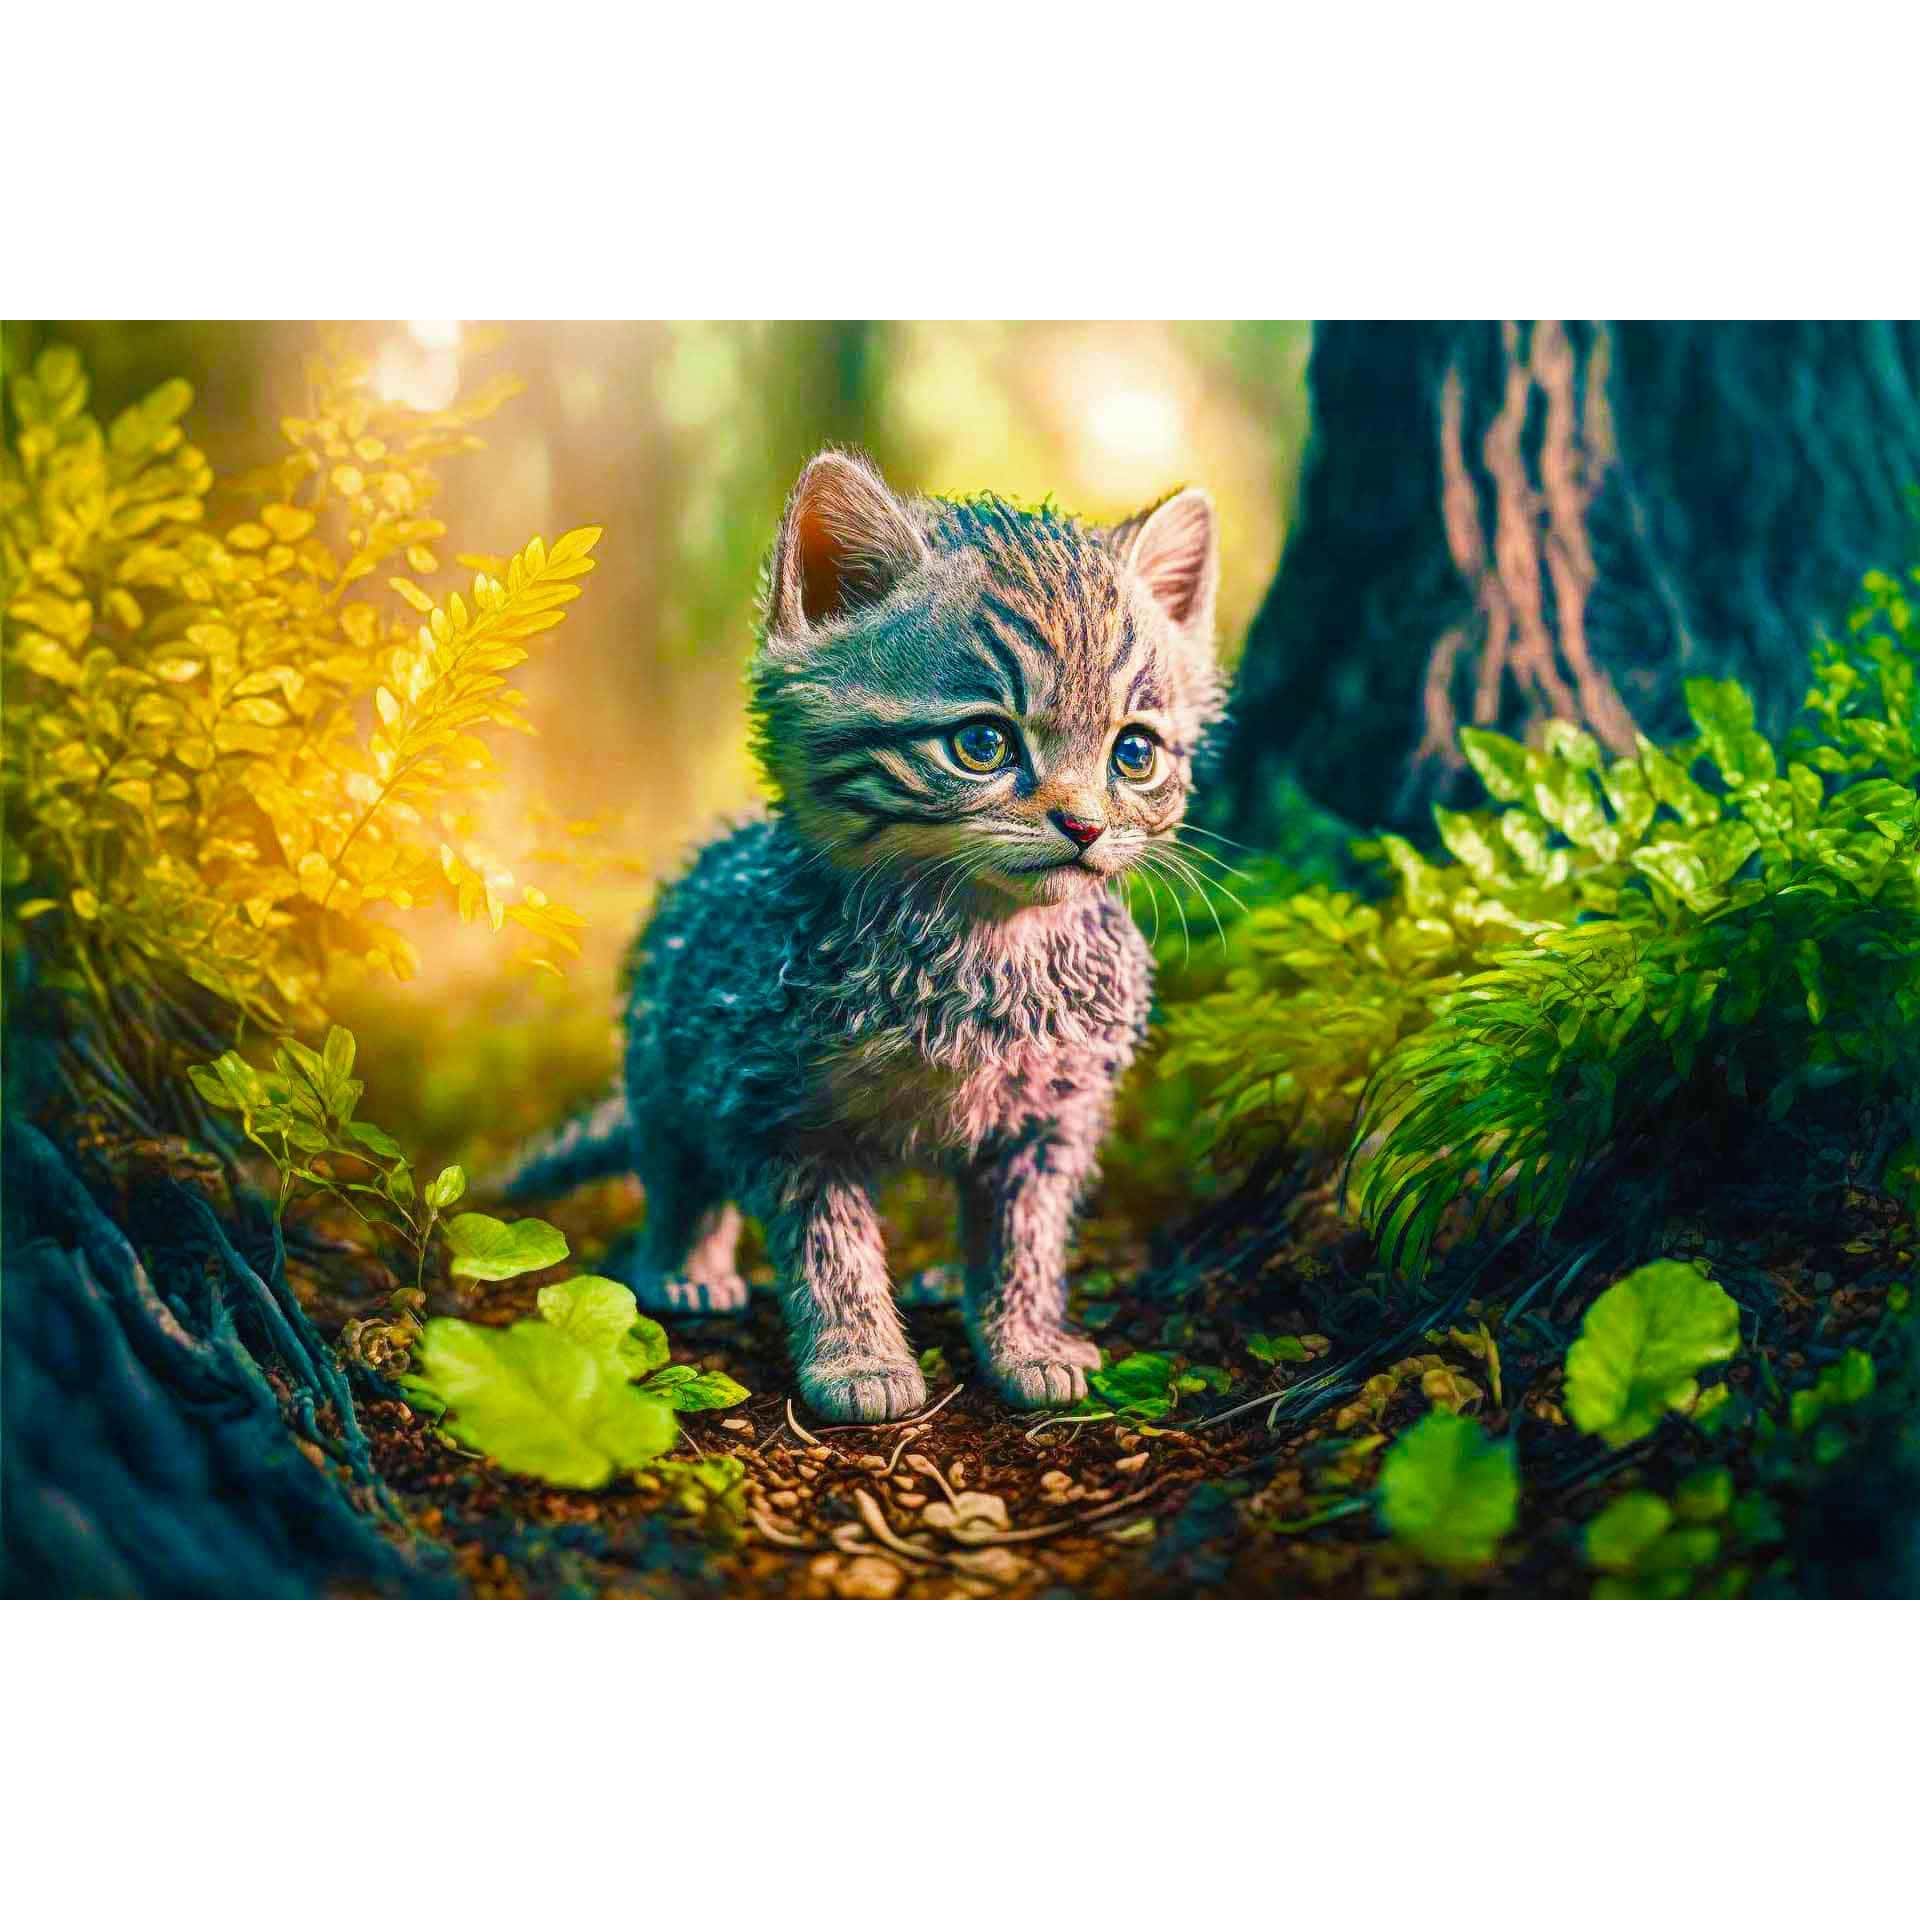 Diamond Painting - Wildkätzchen, Wald - gedruckt in Ultra-HD - Horizontal, Katze, Tiere